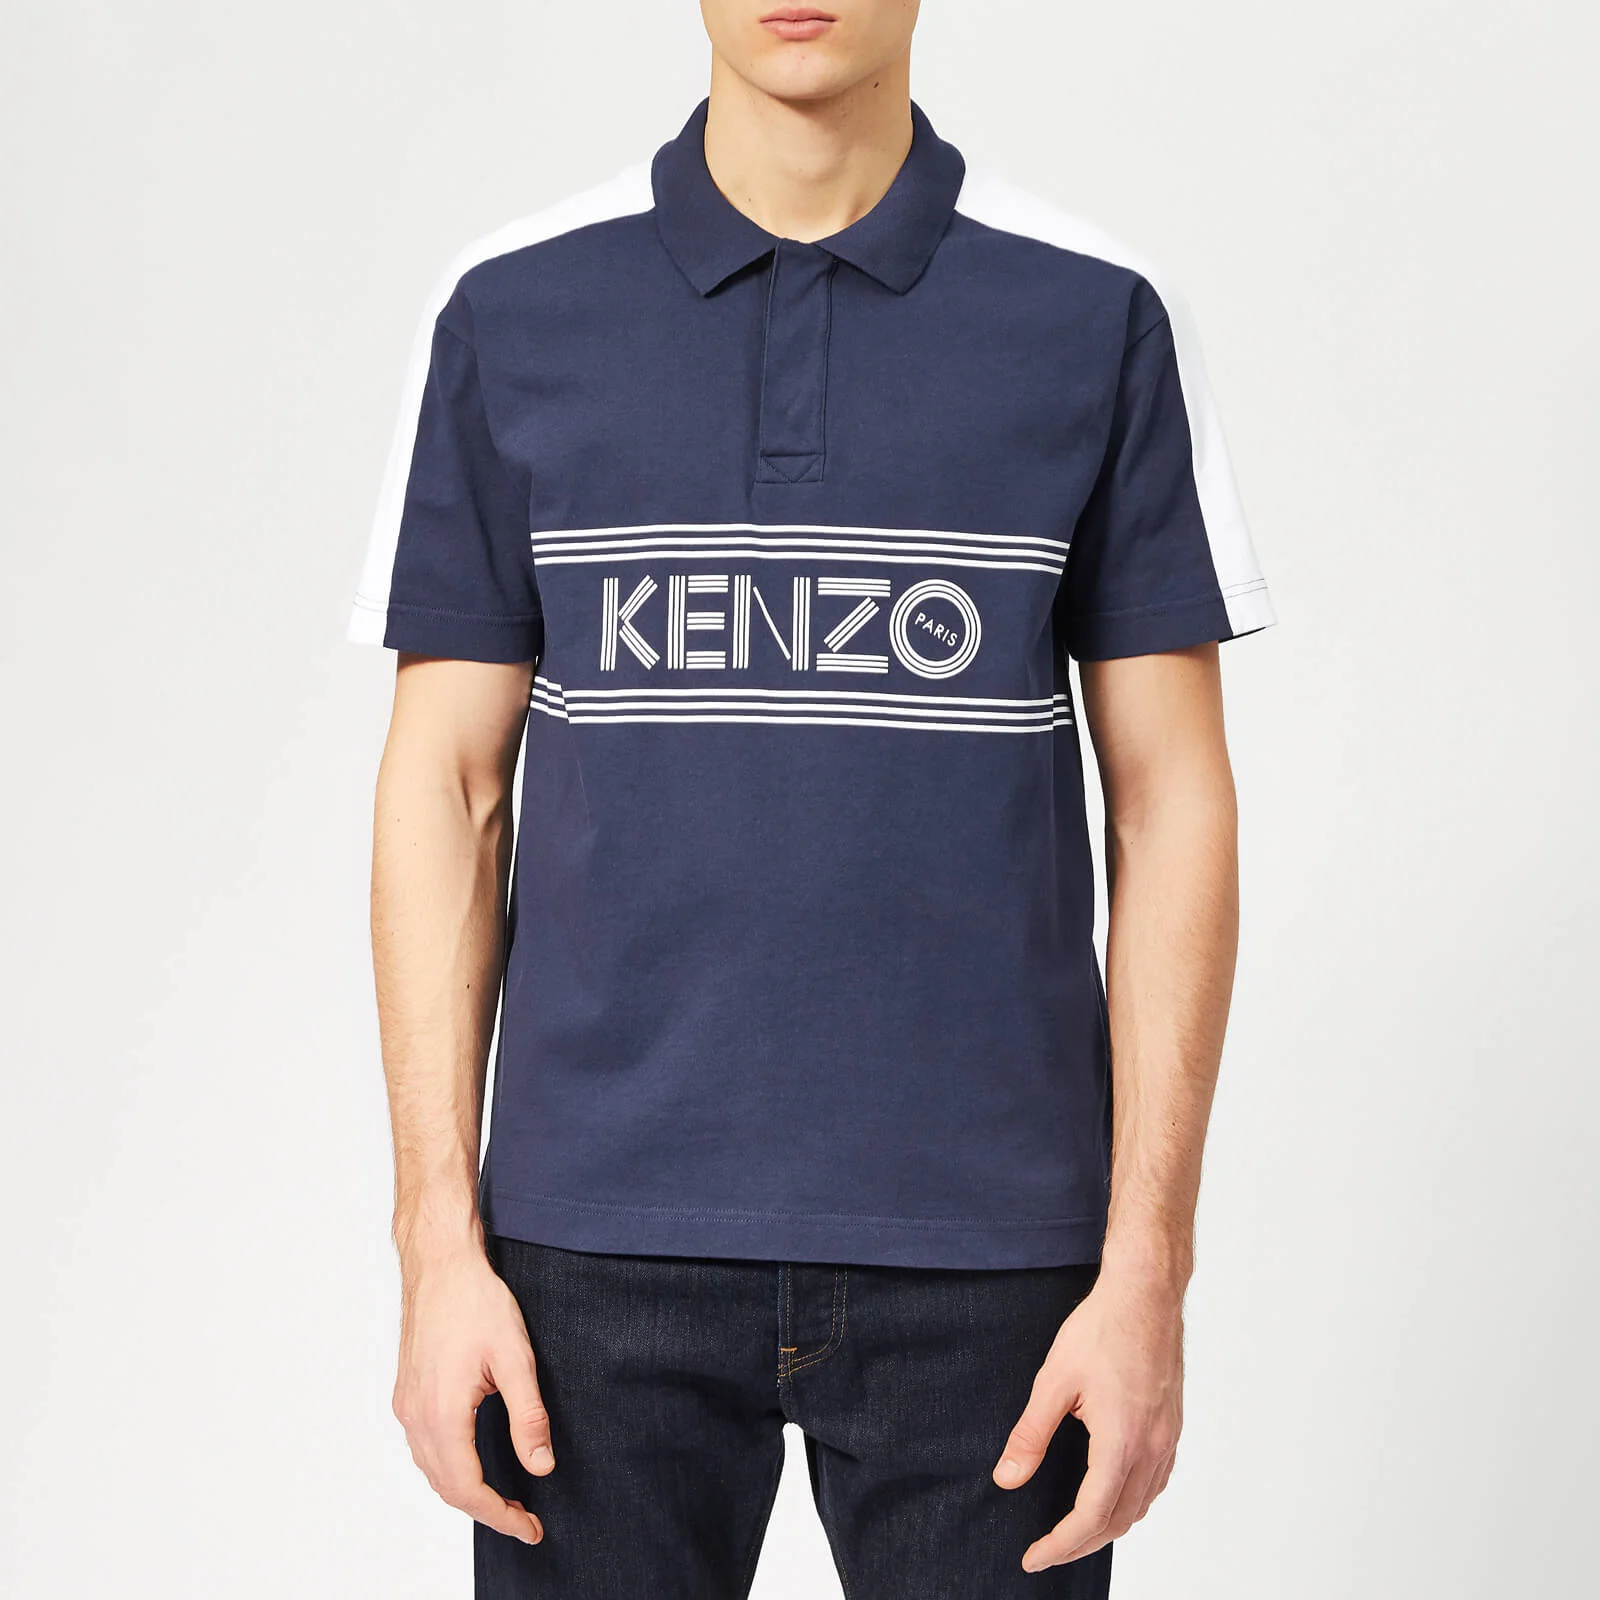 KENZO Men's Chest Logo Polo Shirt - Ink Image 1